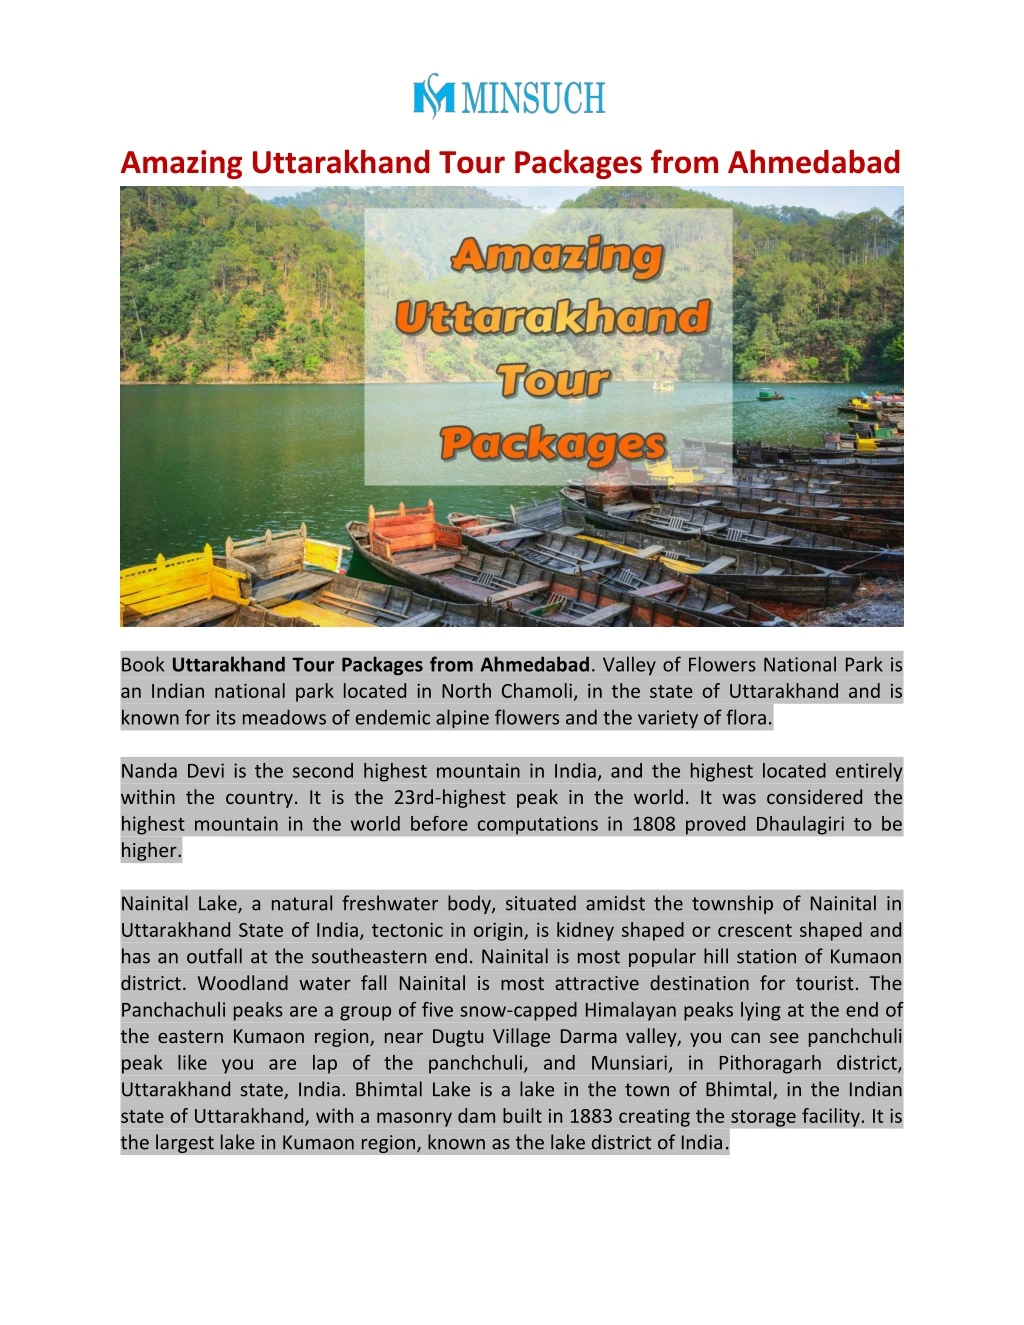 amazing uttarakhand tour packages from ahmedabad